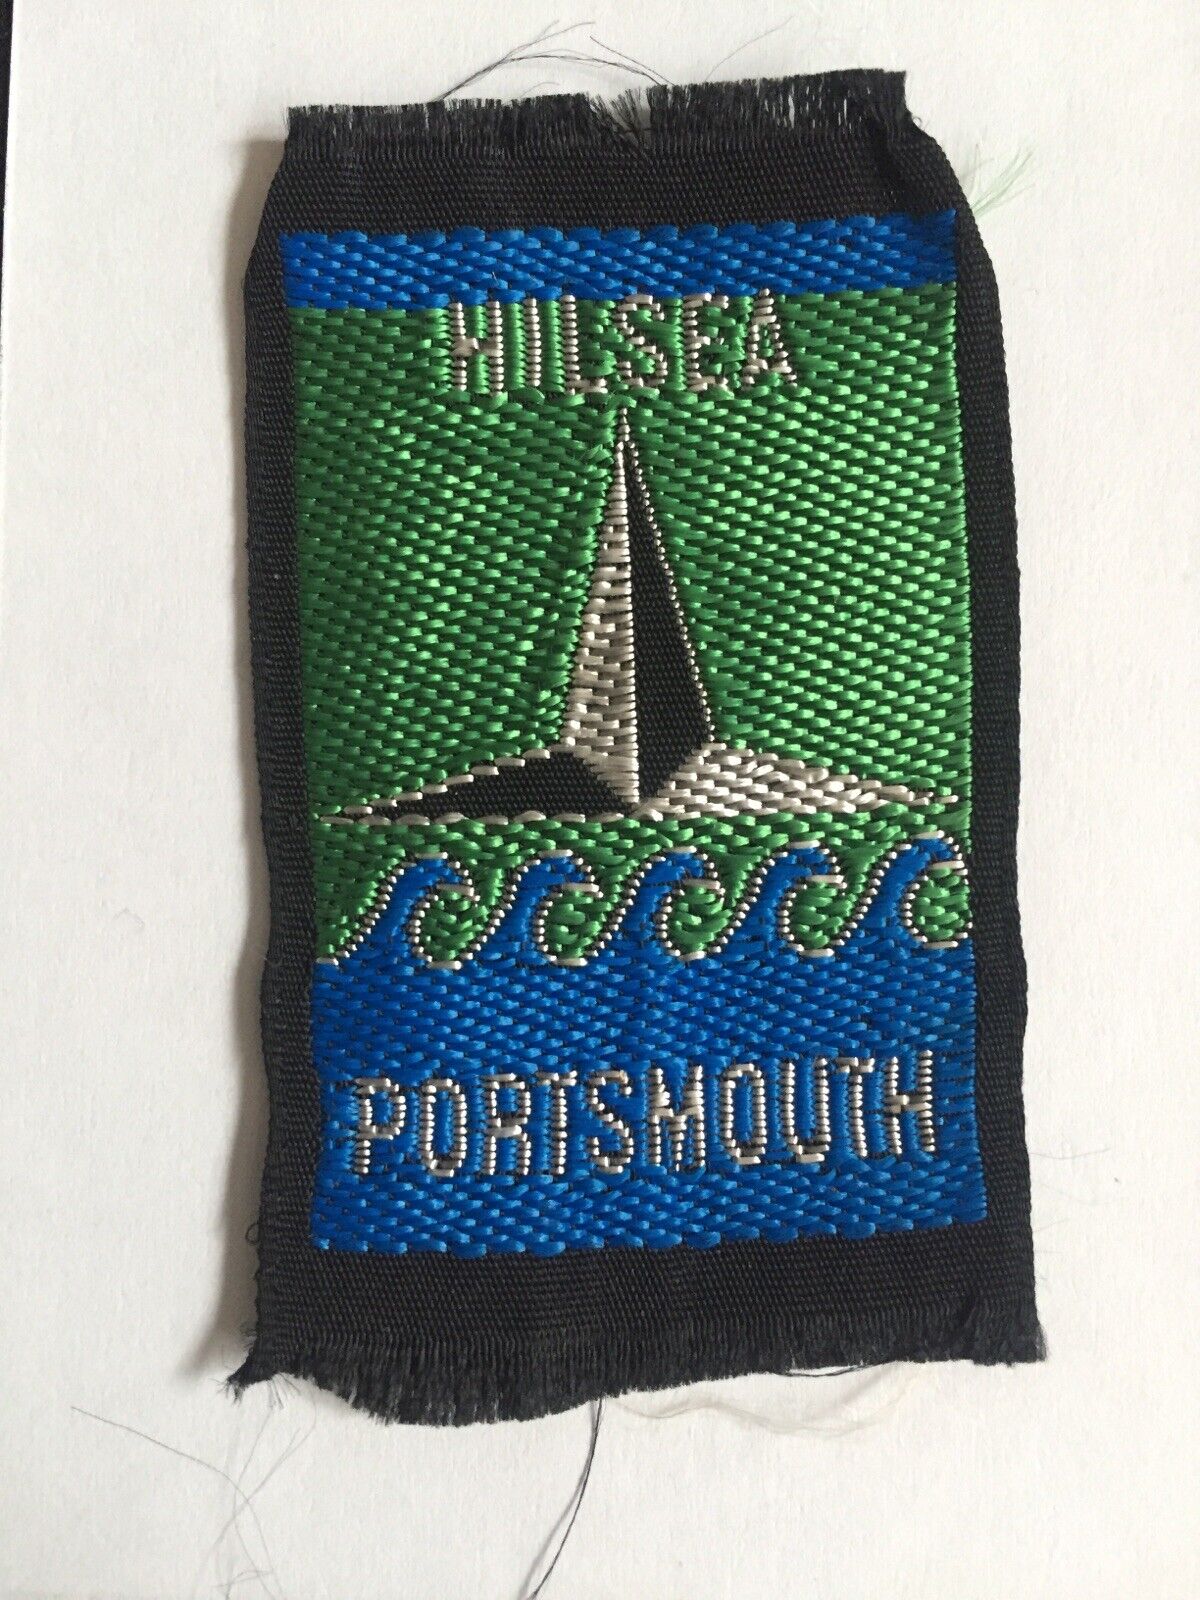 UK Scout Badge. Hilsea Portsmouth District ribbon 